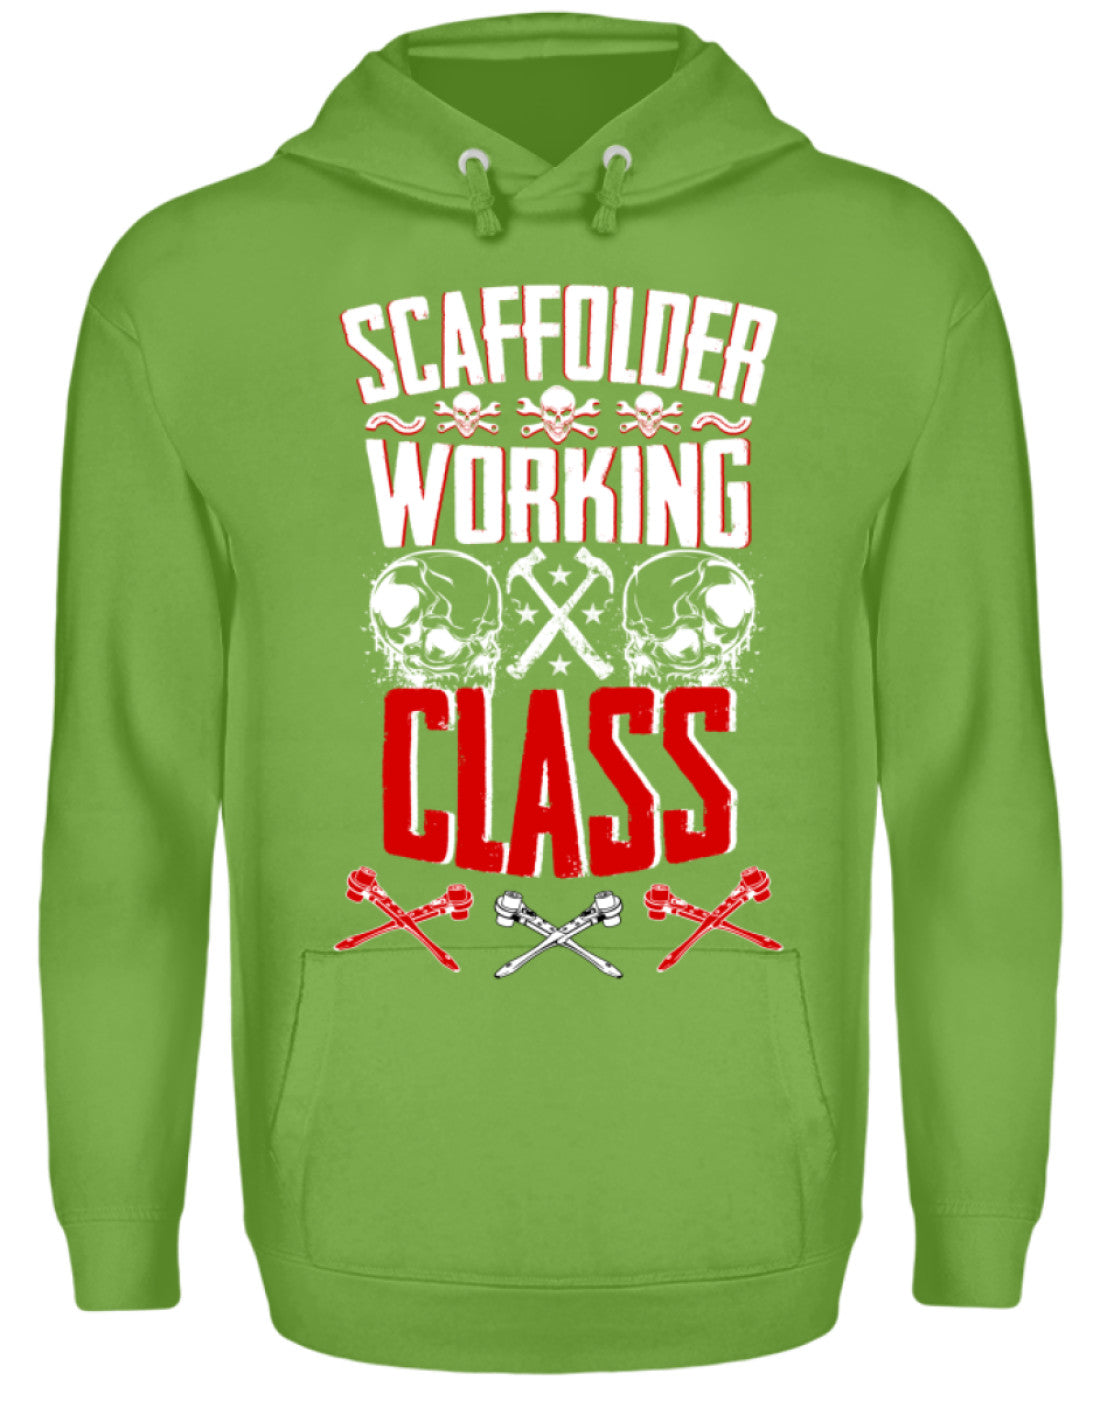 SCAFFOLDER WORKING CLASS €34.95 Gerüstbauer - Shop >>